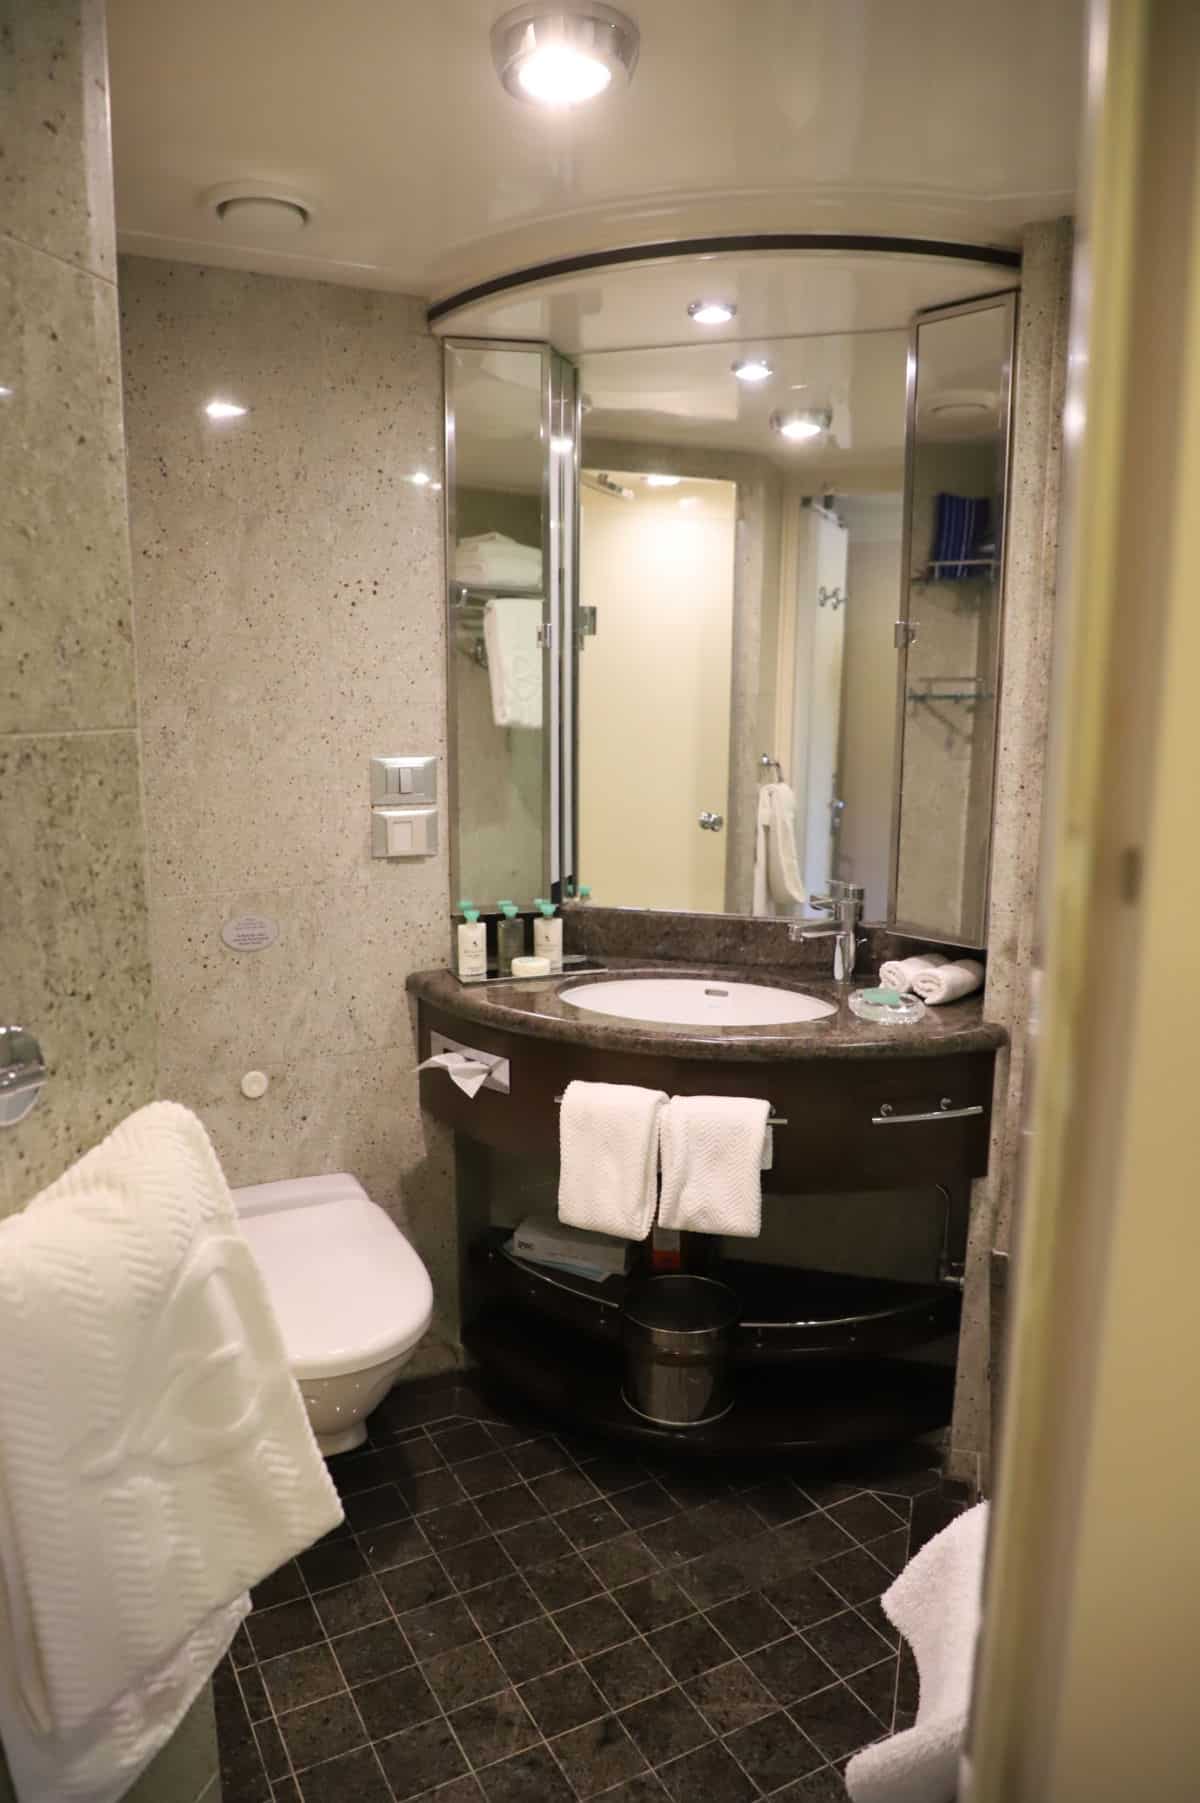 Bathroom on cruise ship.